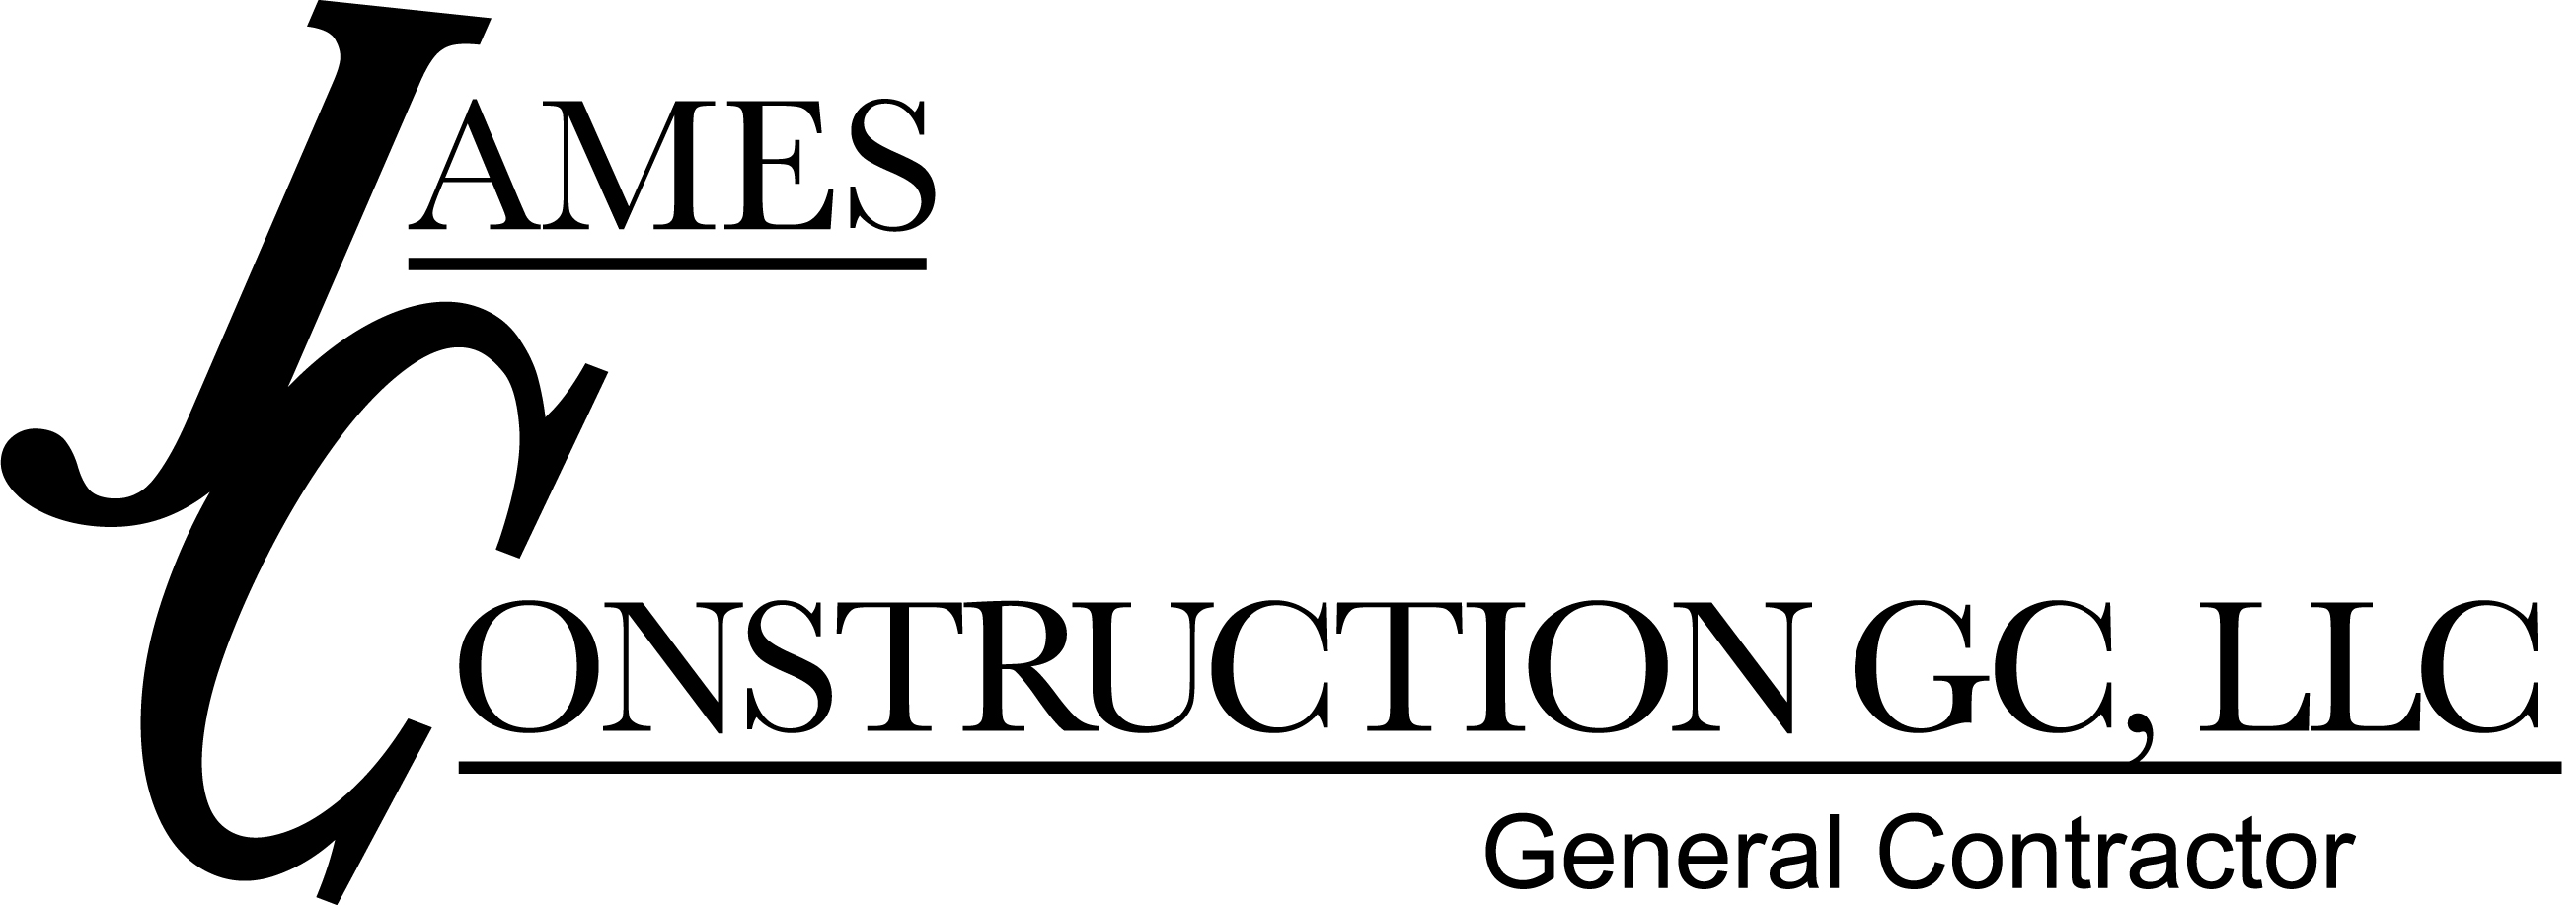 James Contruction GC, LLC